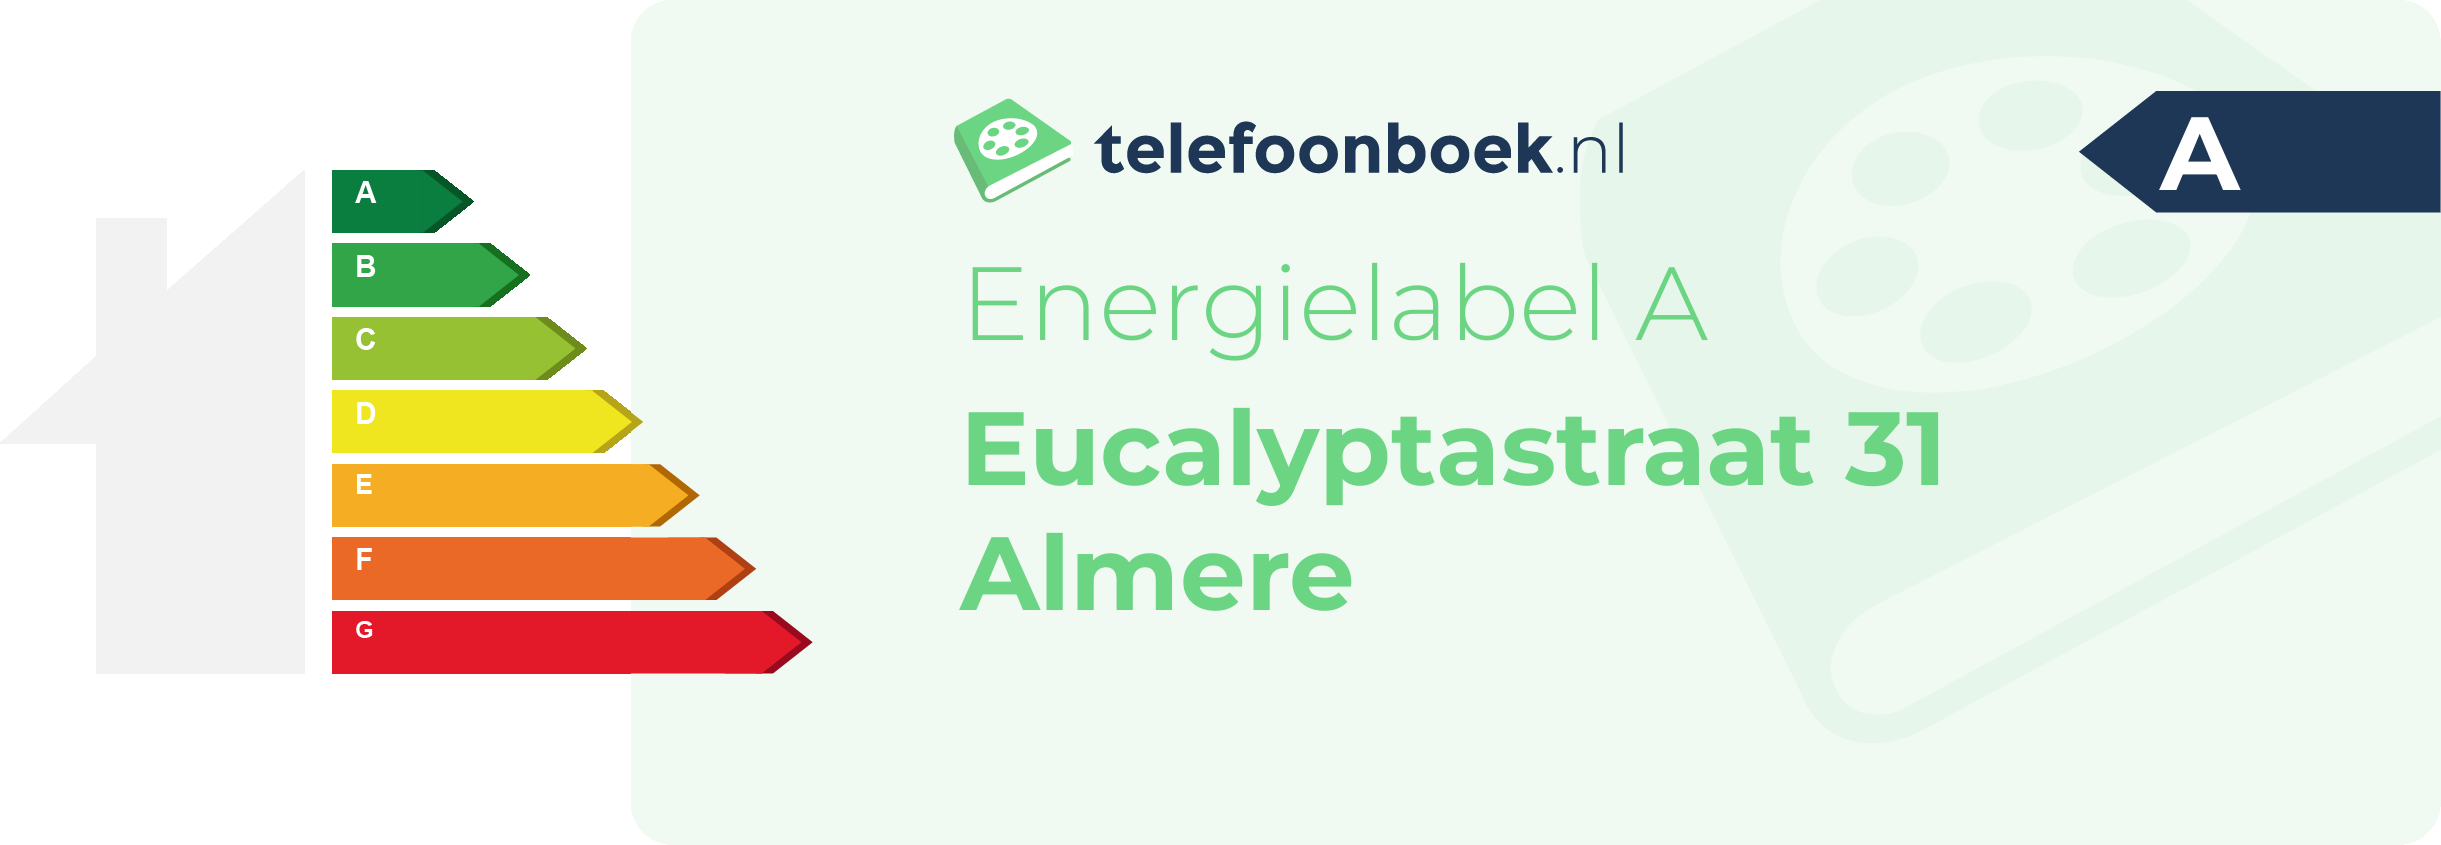 Energielabel Eucalyptastraat 31 Almere